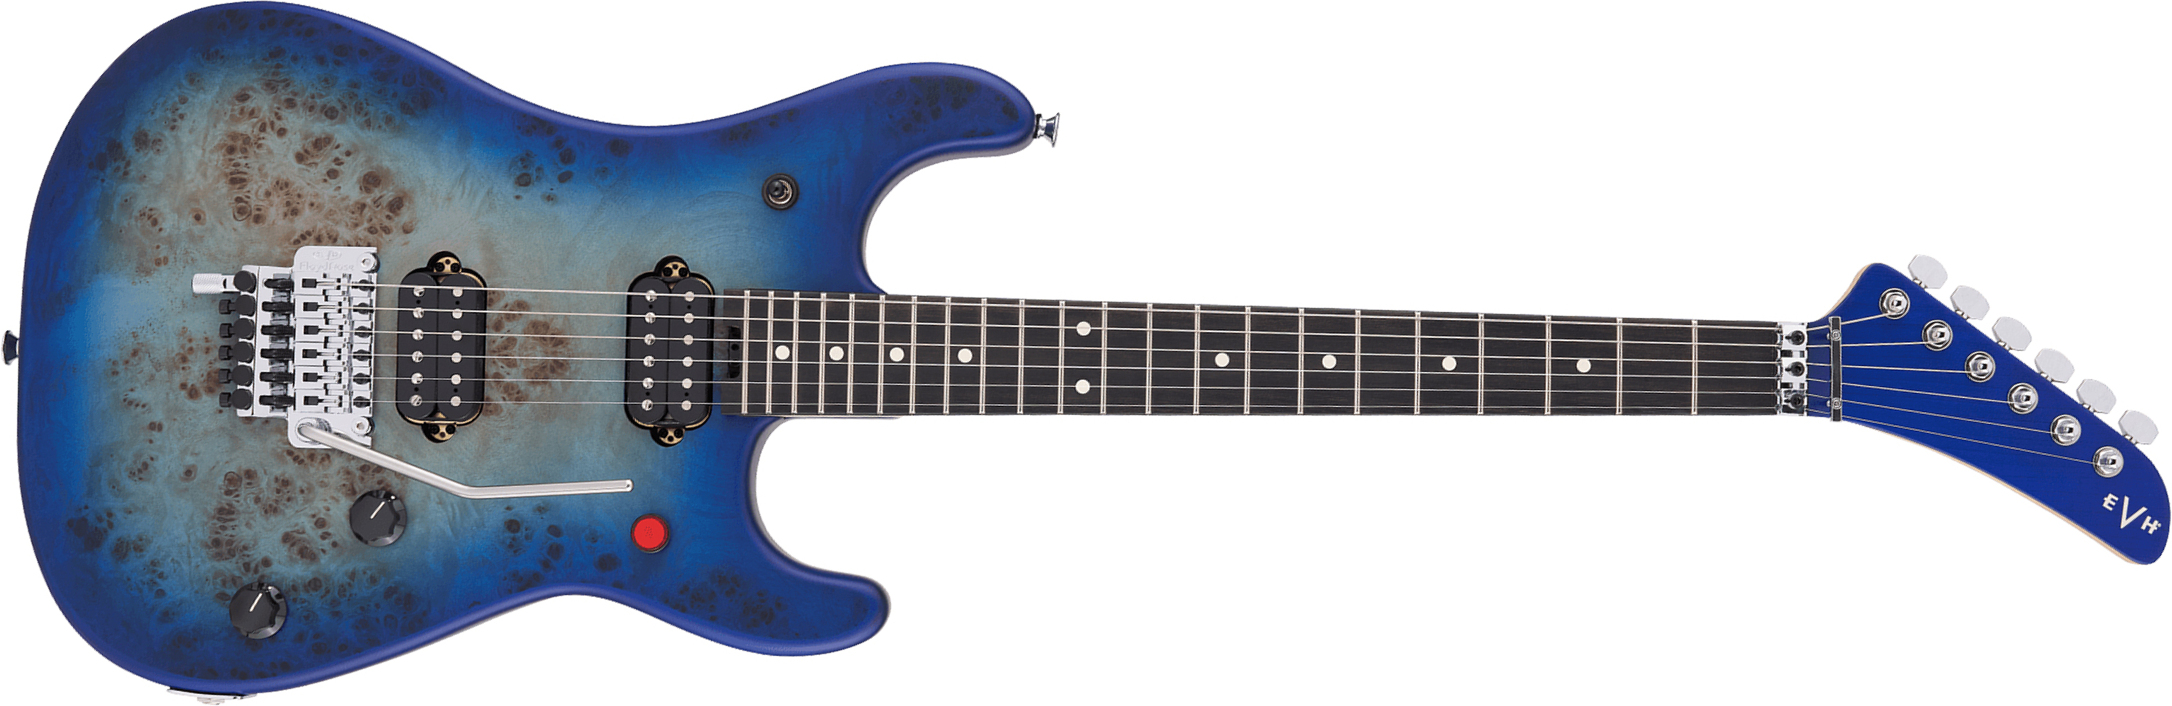 Evh 5150 Deluxe Poplar Burl Mex 2h Fr Eb - Aqua Burst - Str shape electric guitar - Main picture